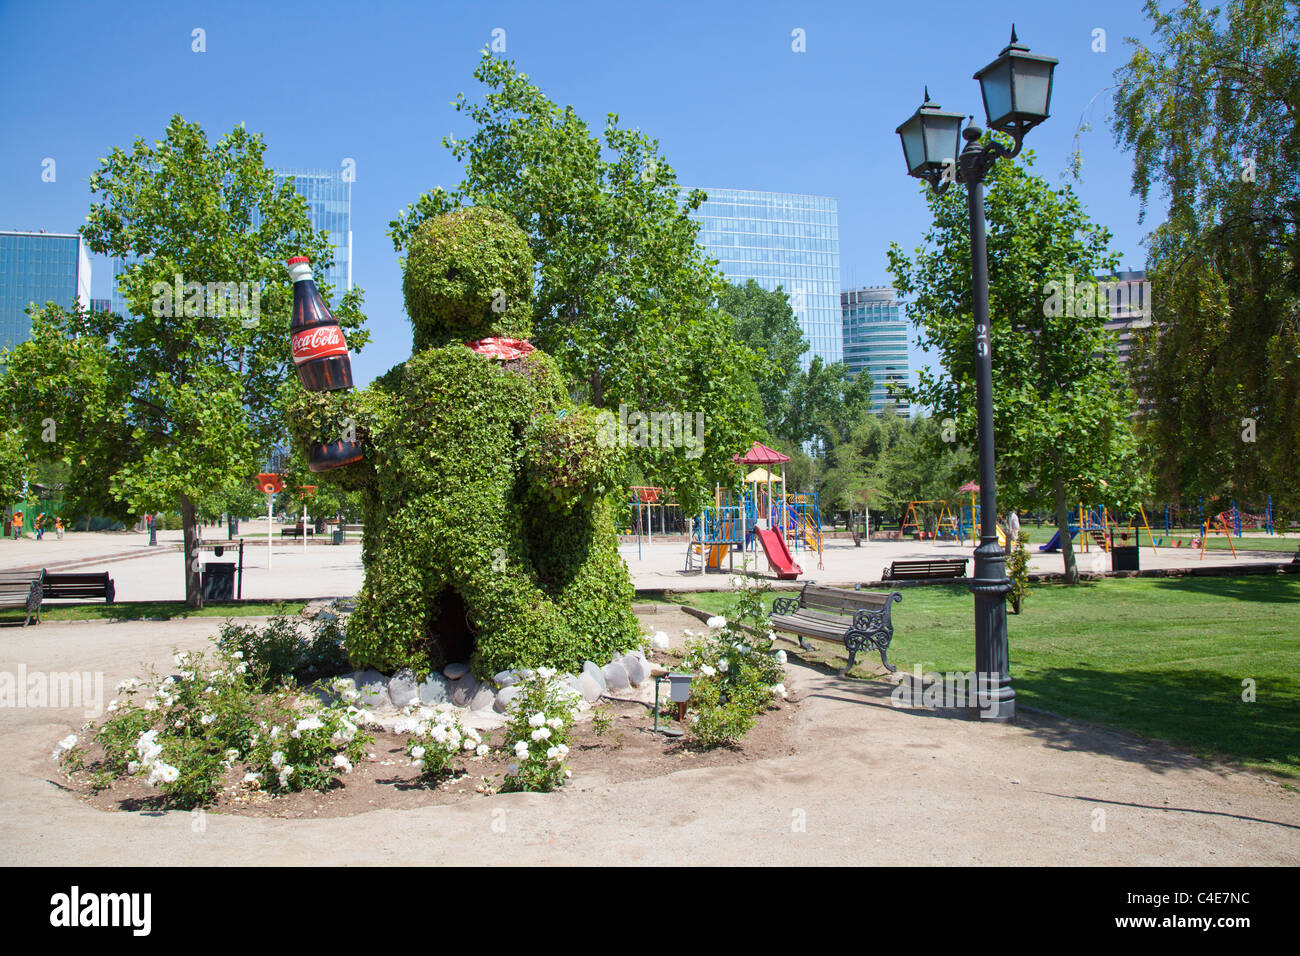 Topiary figure holding giant Coke bottle, Parque Arauco, Vitacura, Santiago, Chile Stock Photo